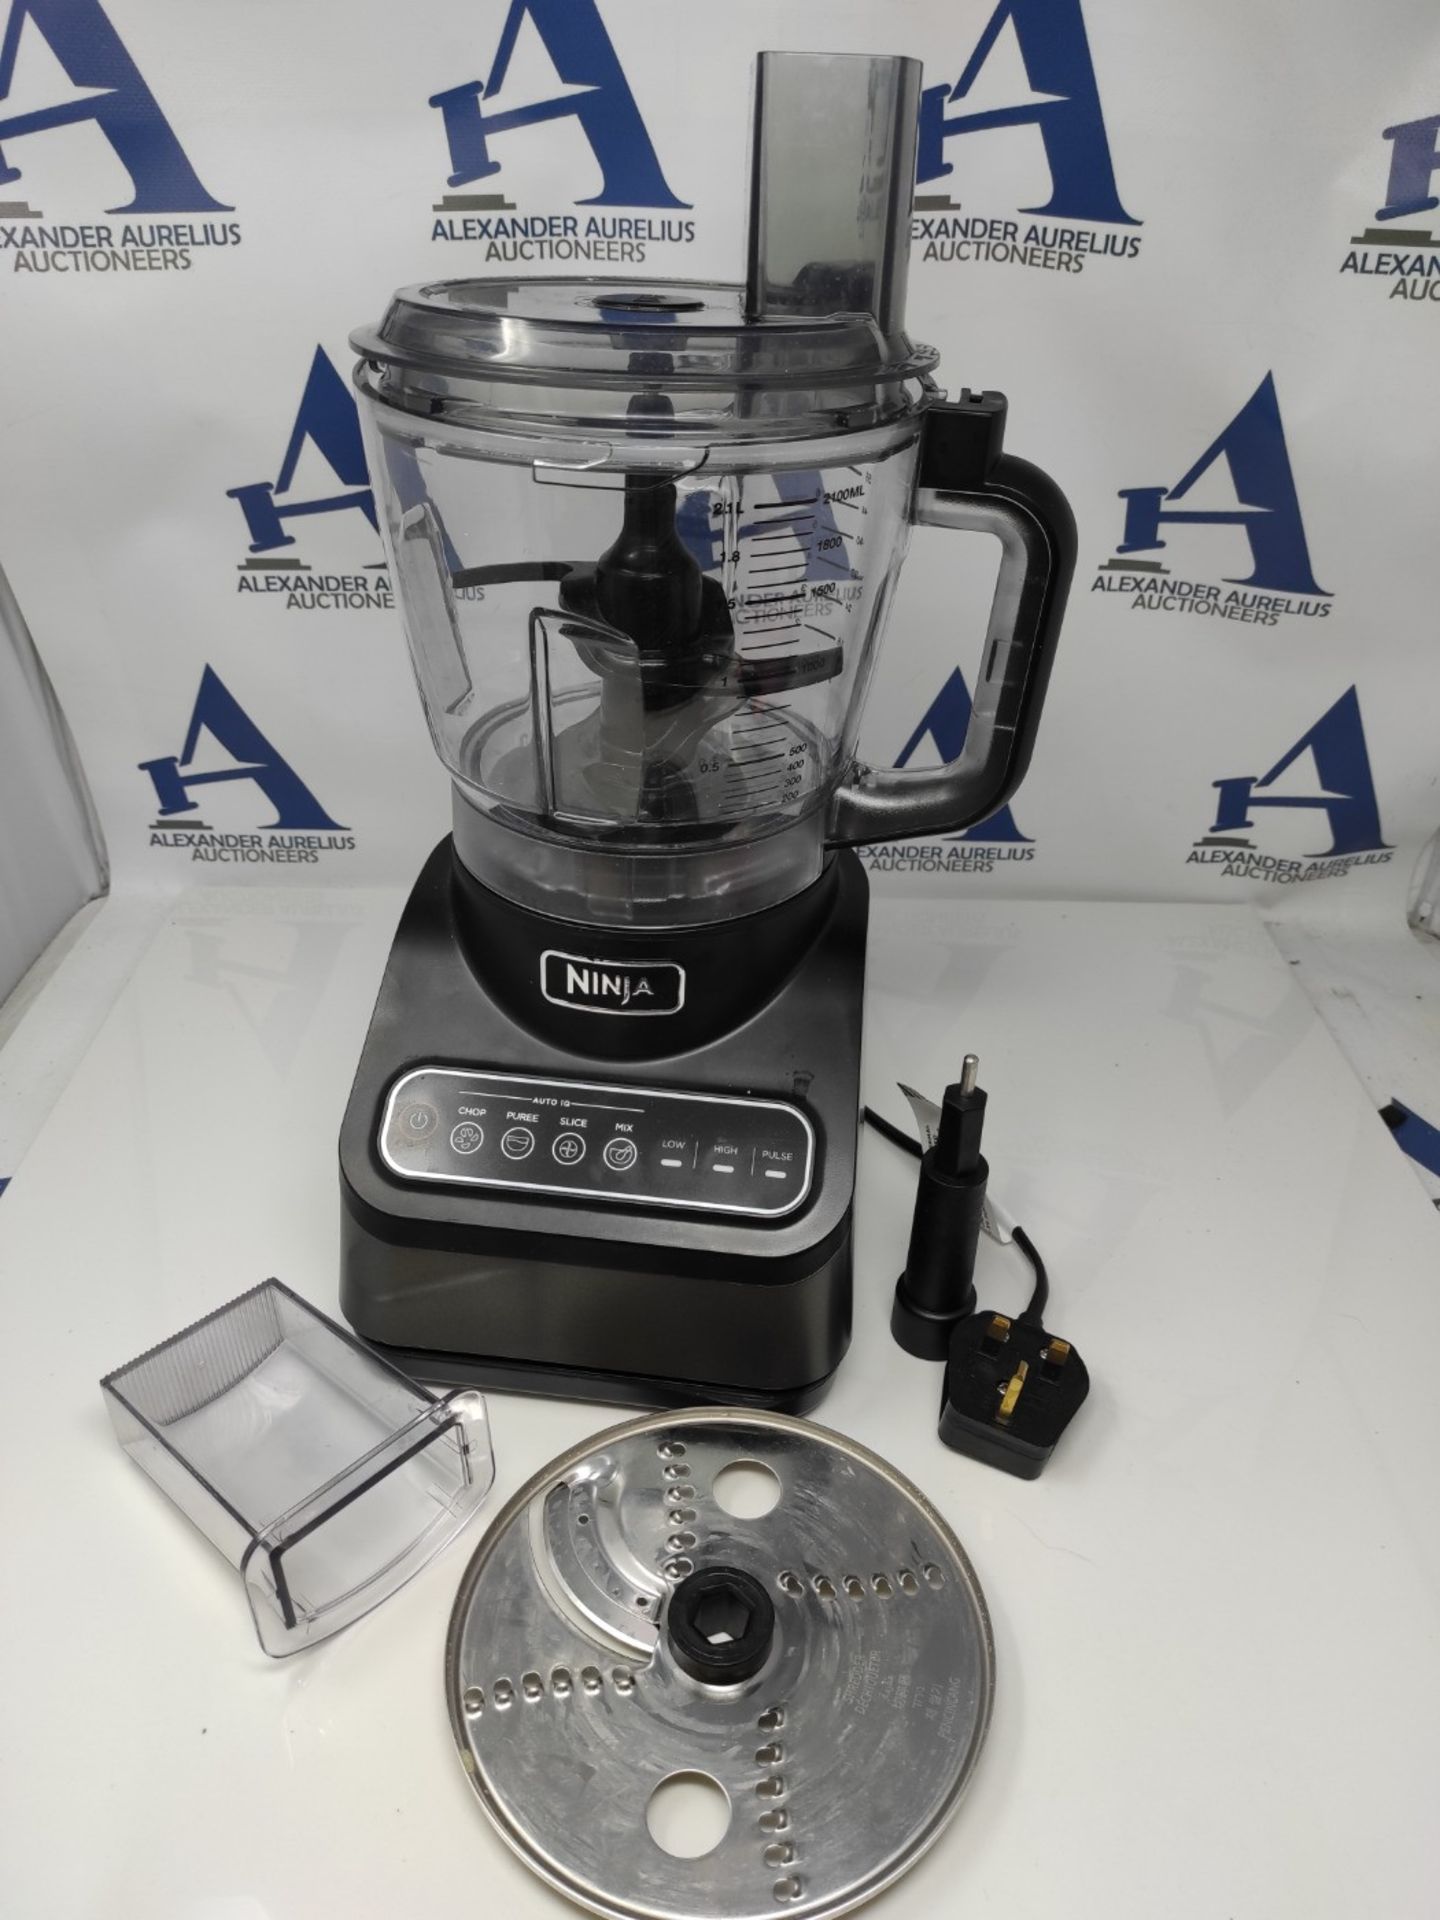 RRP £79.00 Ninja Food Processor with 4 Automatic Programs; Chop, Puree, Slice, Mix, and 3 Manual - Image 3 of 3